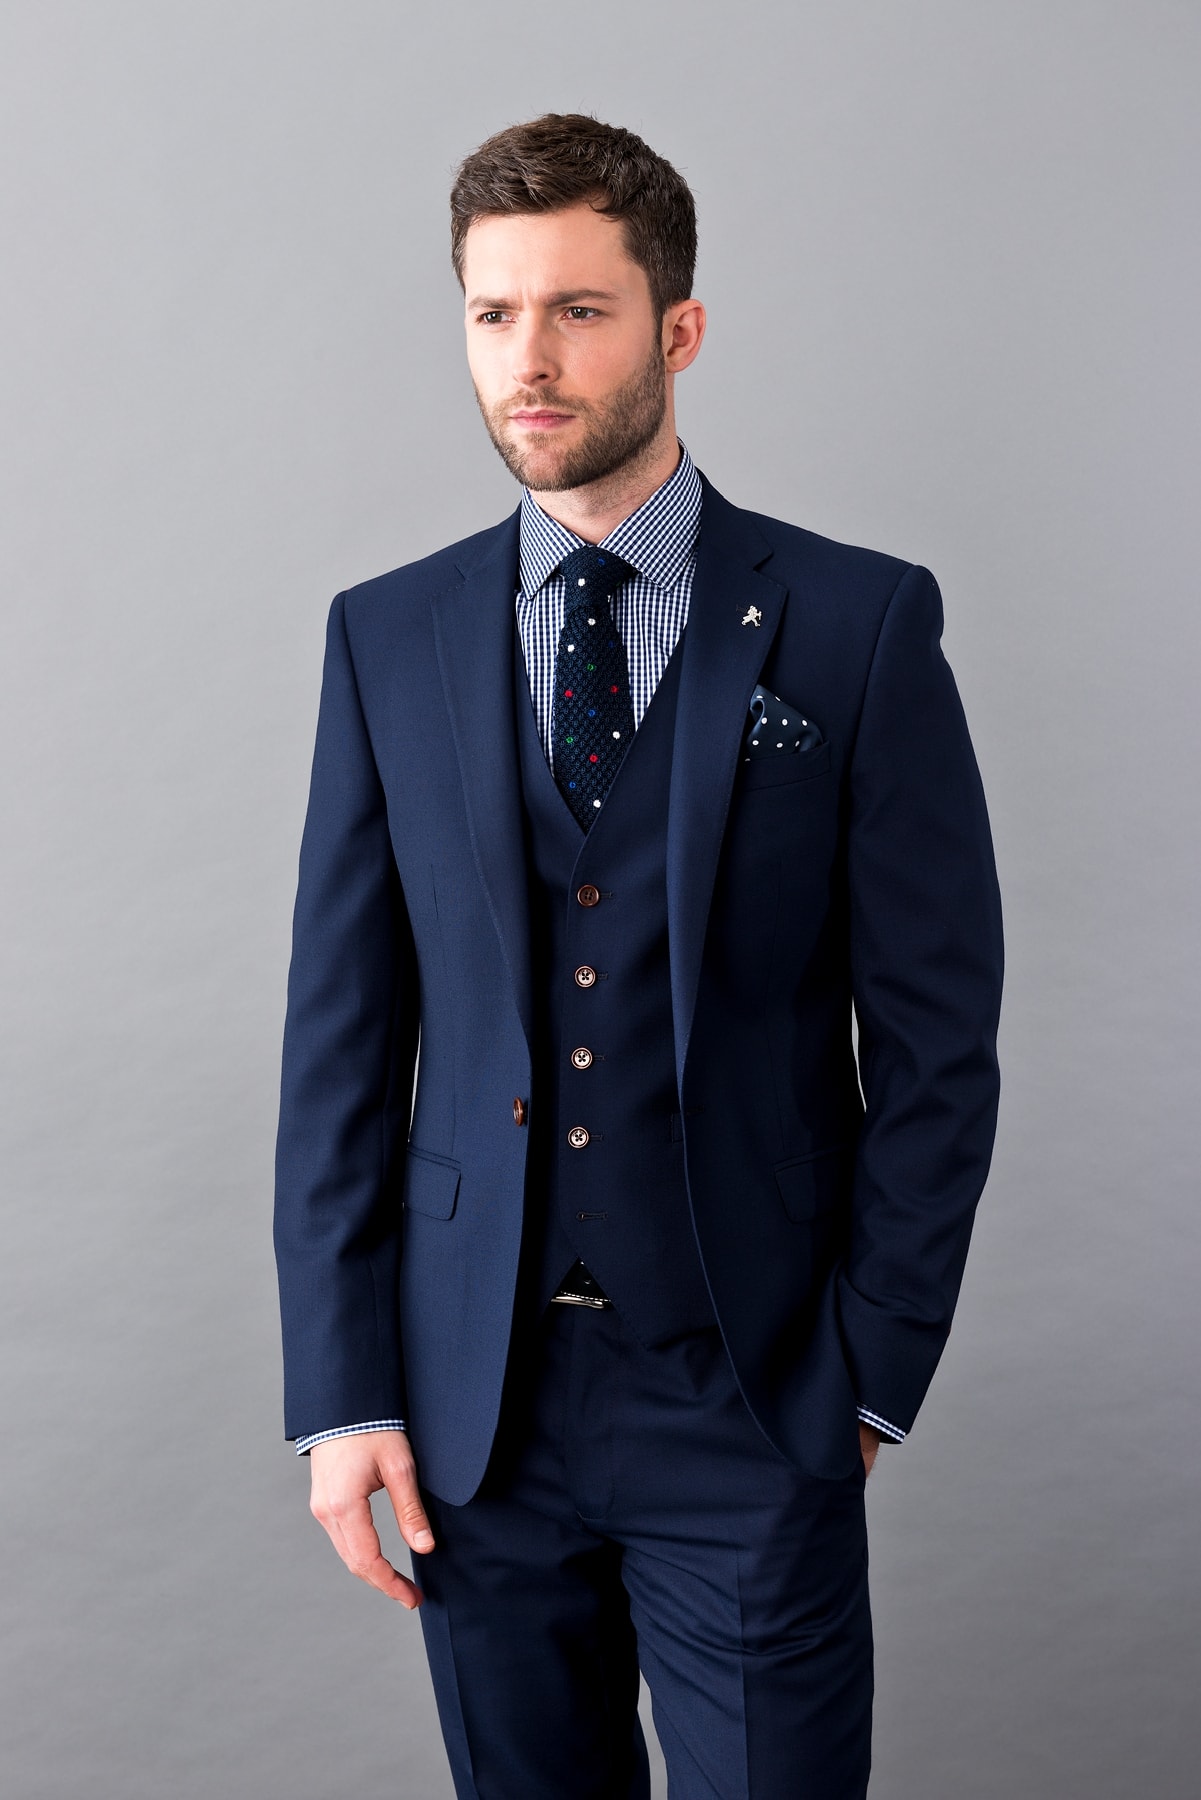 How to Tie a Tie | Men's Formal Wear | Astares Suit Hire